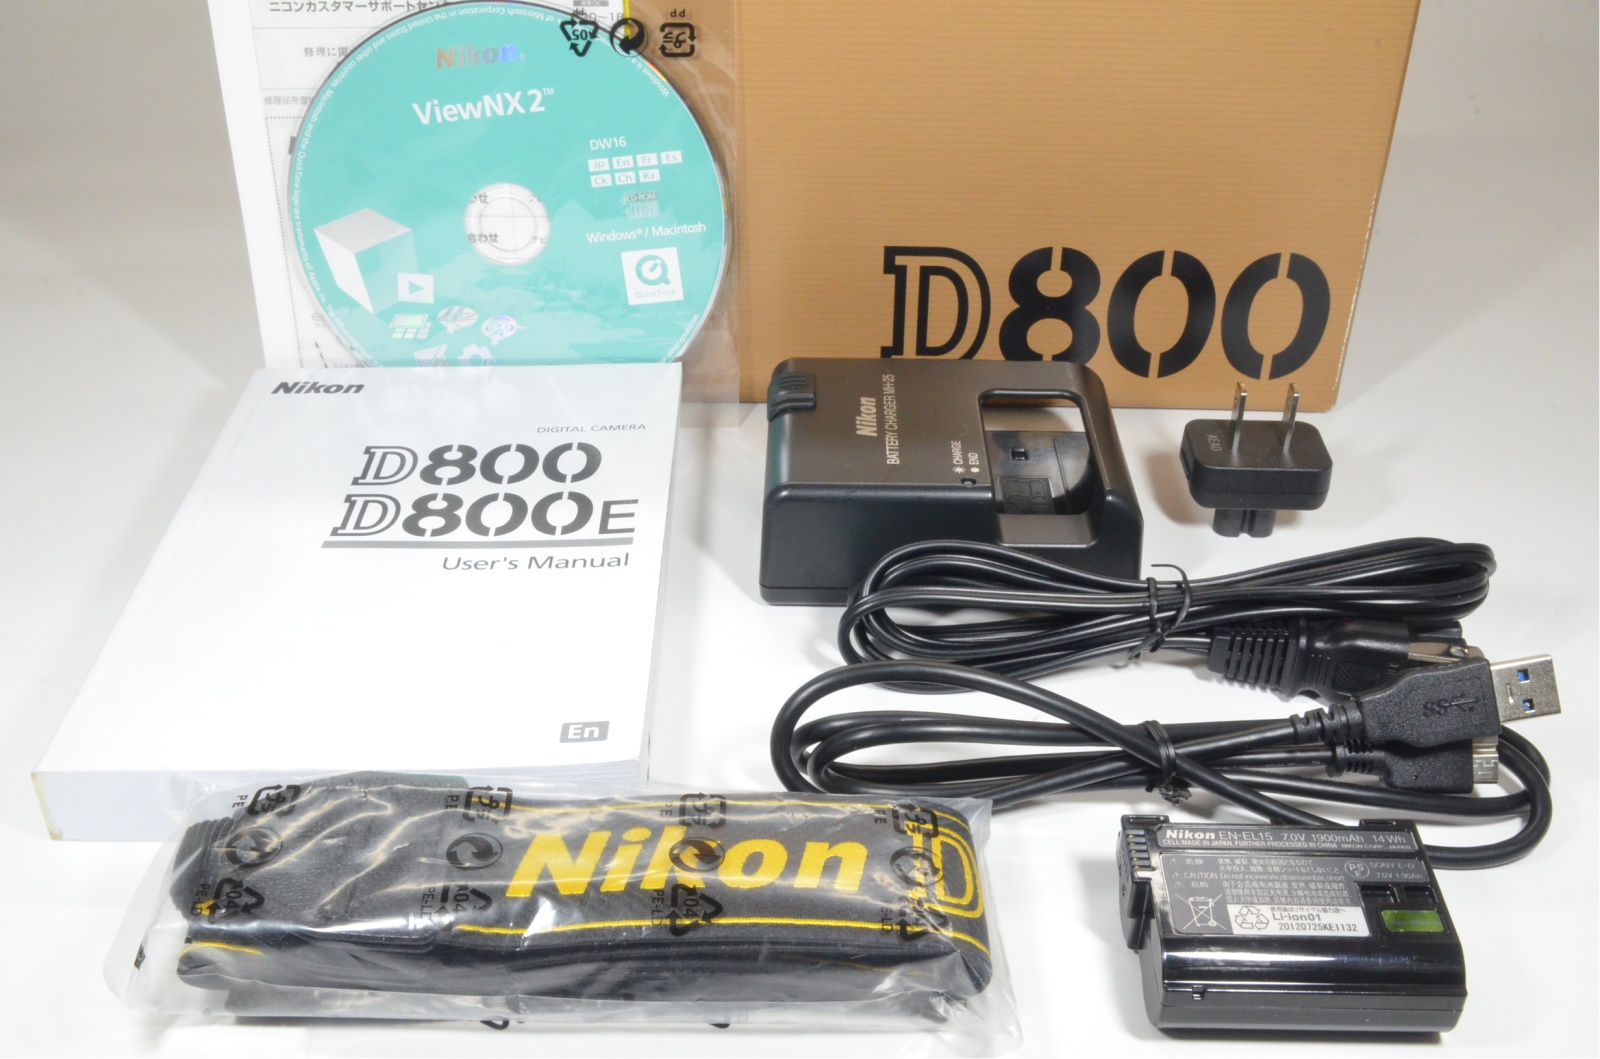 nikon d800 36.3mp digital slr camera body with english user's manual from japan